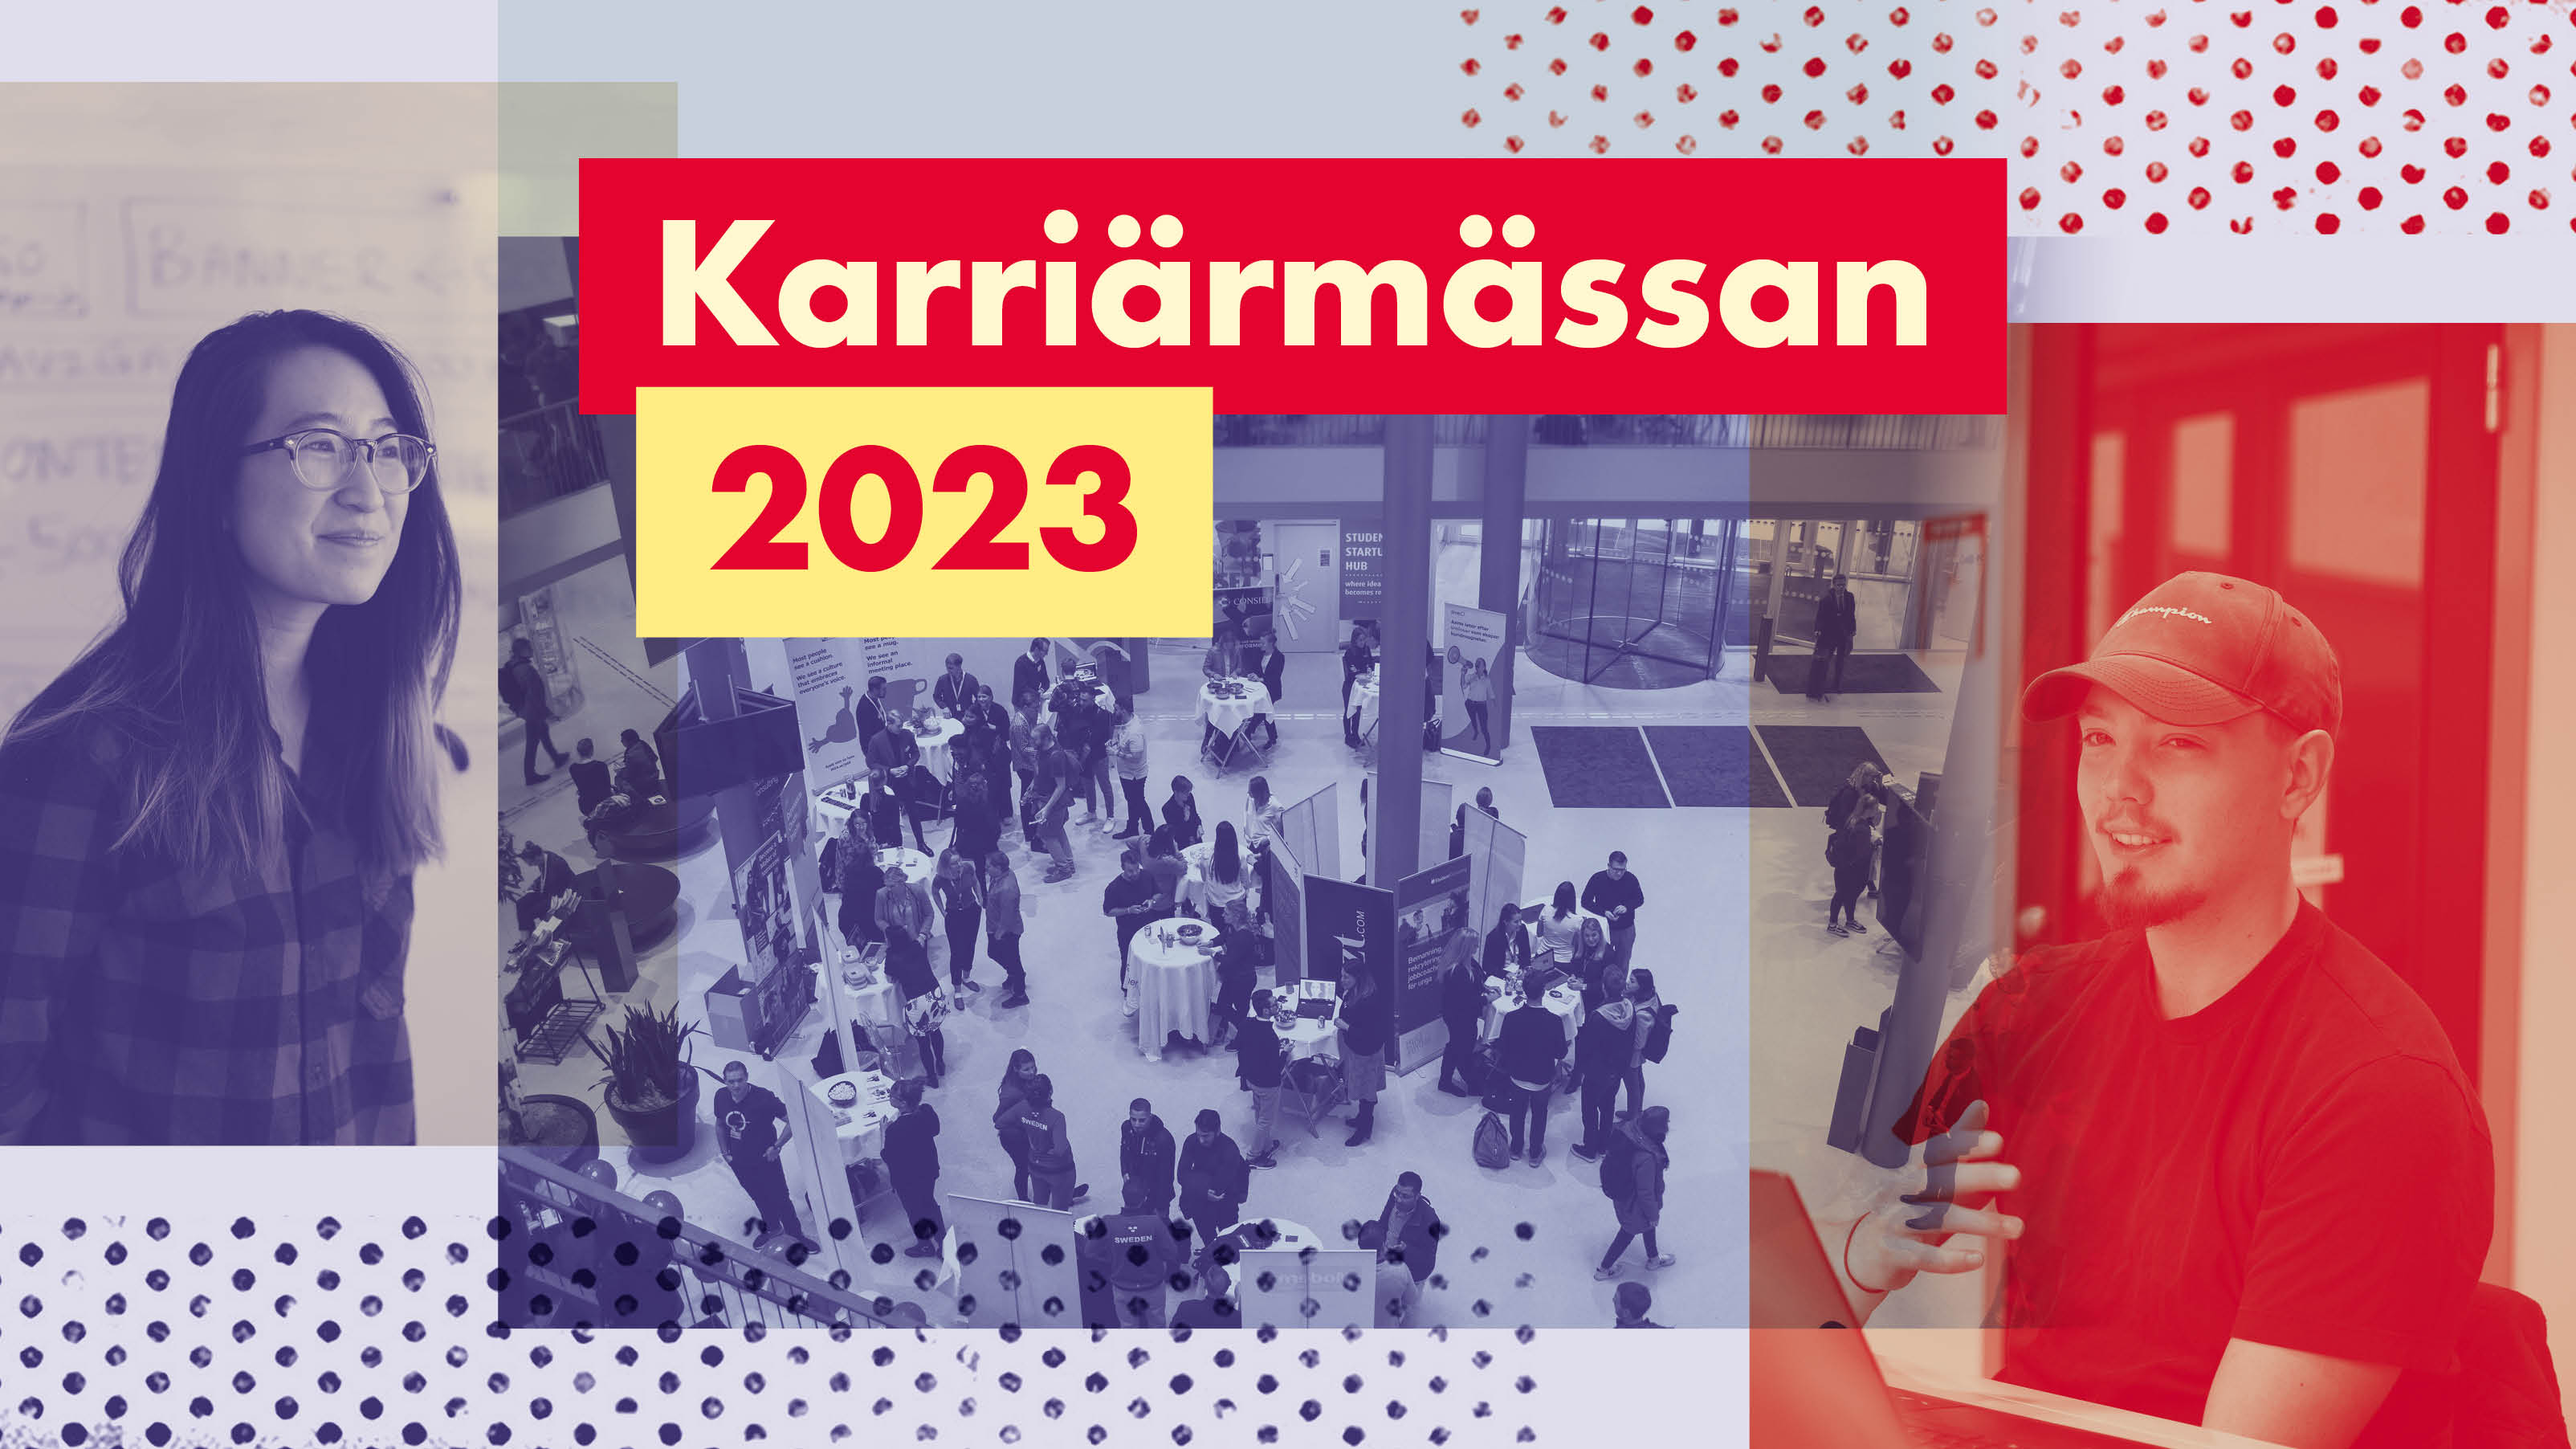 Text Karriärmässan 2023. Students smiling, people on the floor in Niagara